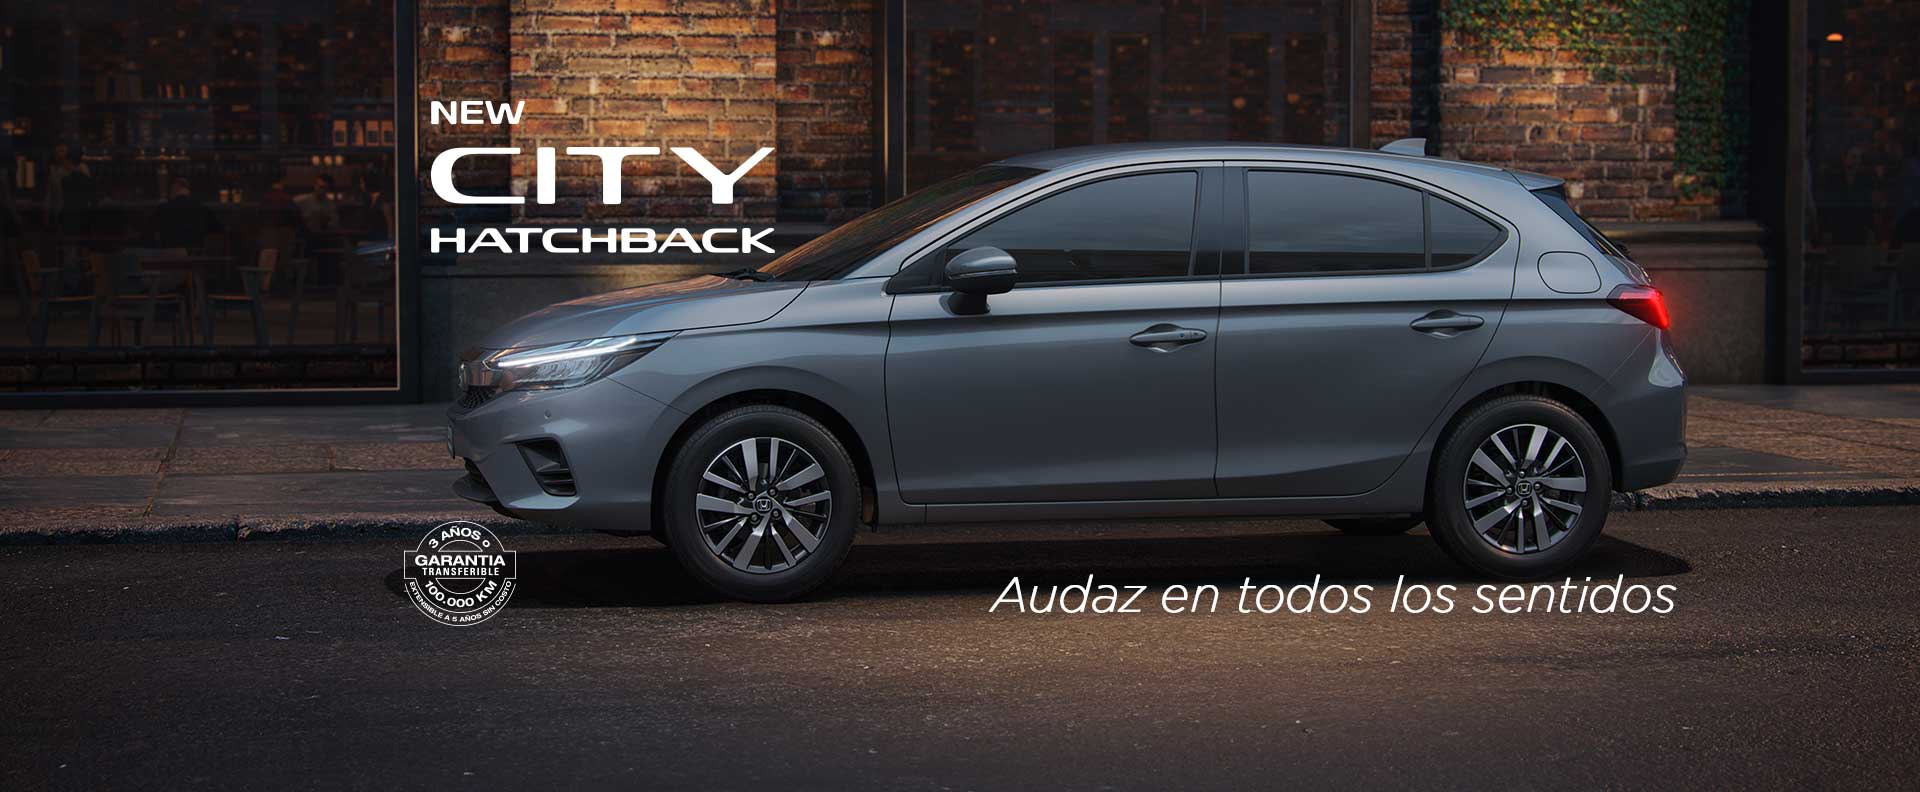 city-hatchback-superior